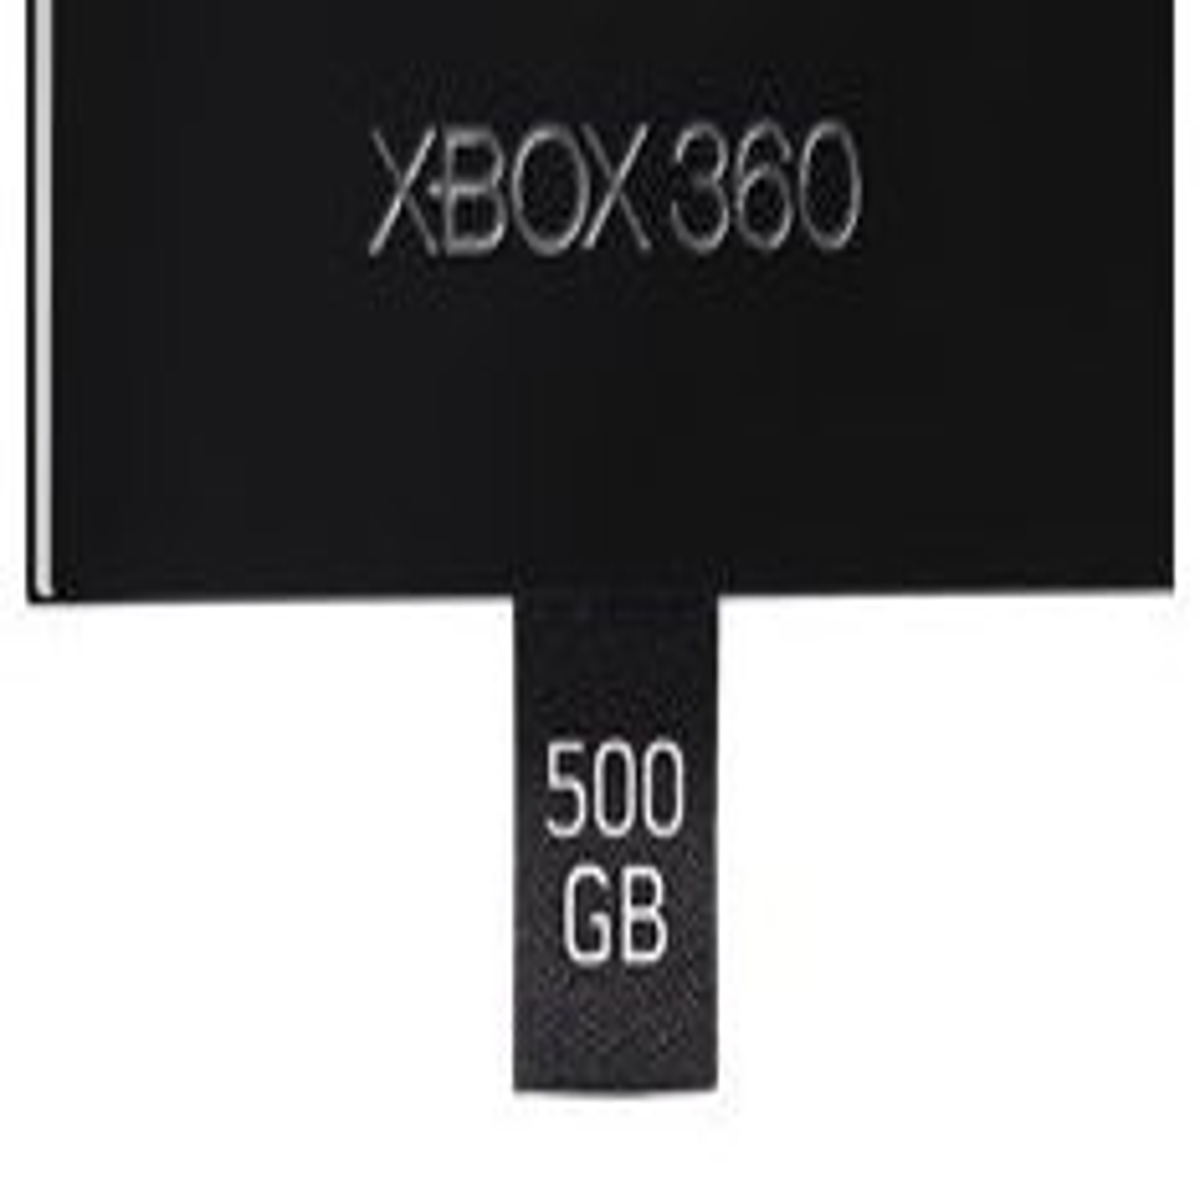 Microsoft anuncia un de 500GB para Xbox 360 | Eurogamer.es